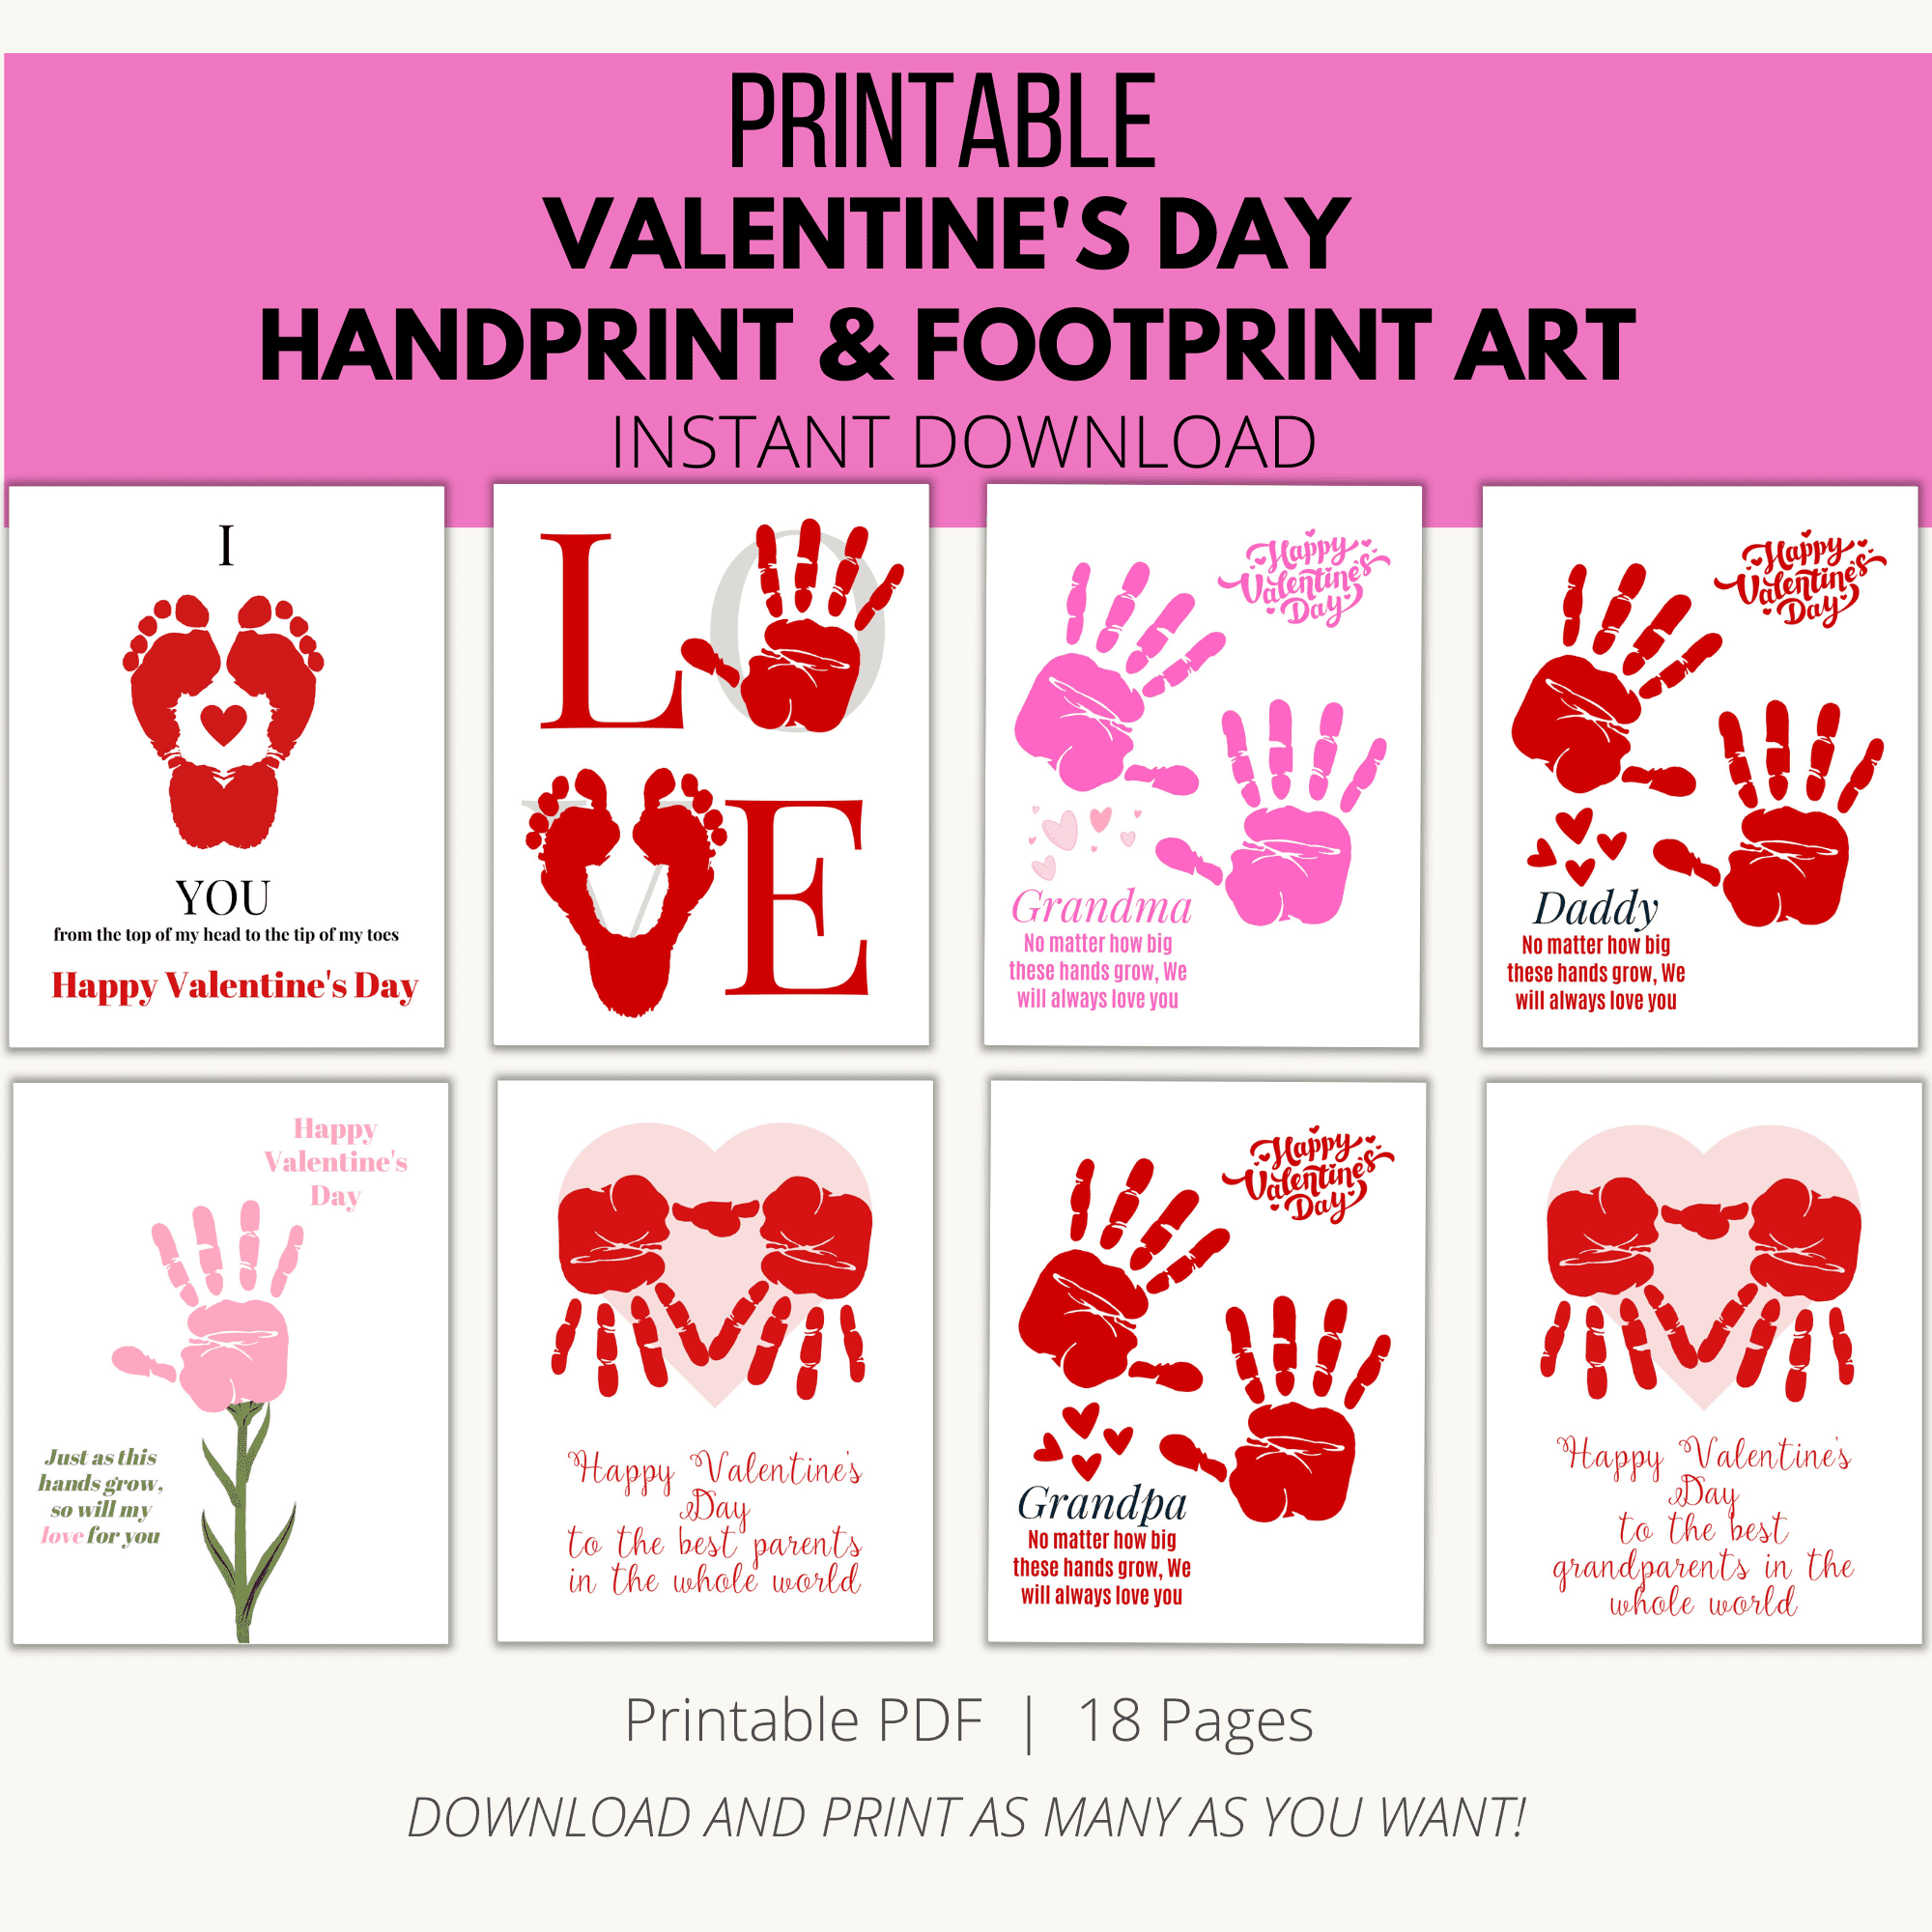 Printable Valentine's Day Handprint & Footprint Art